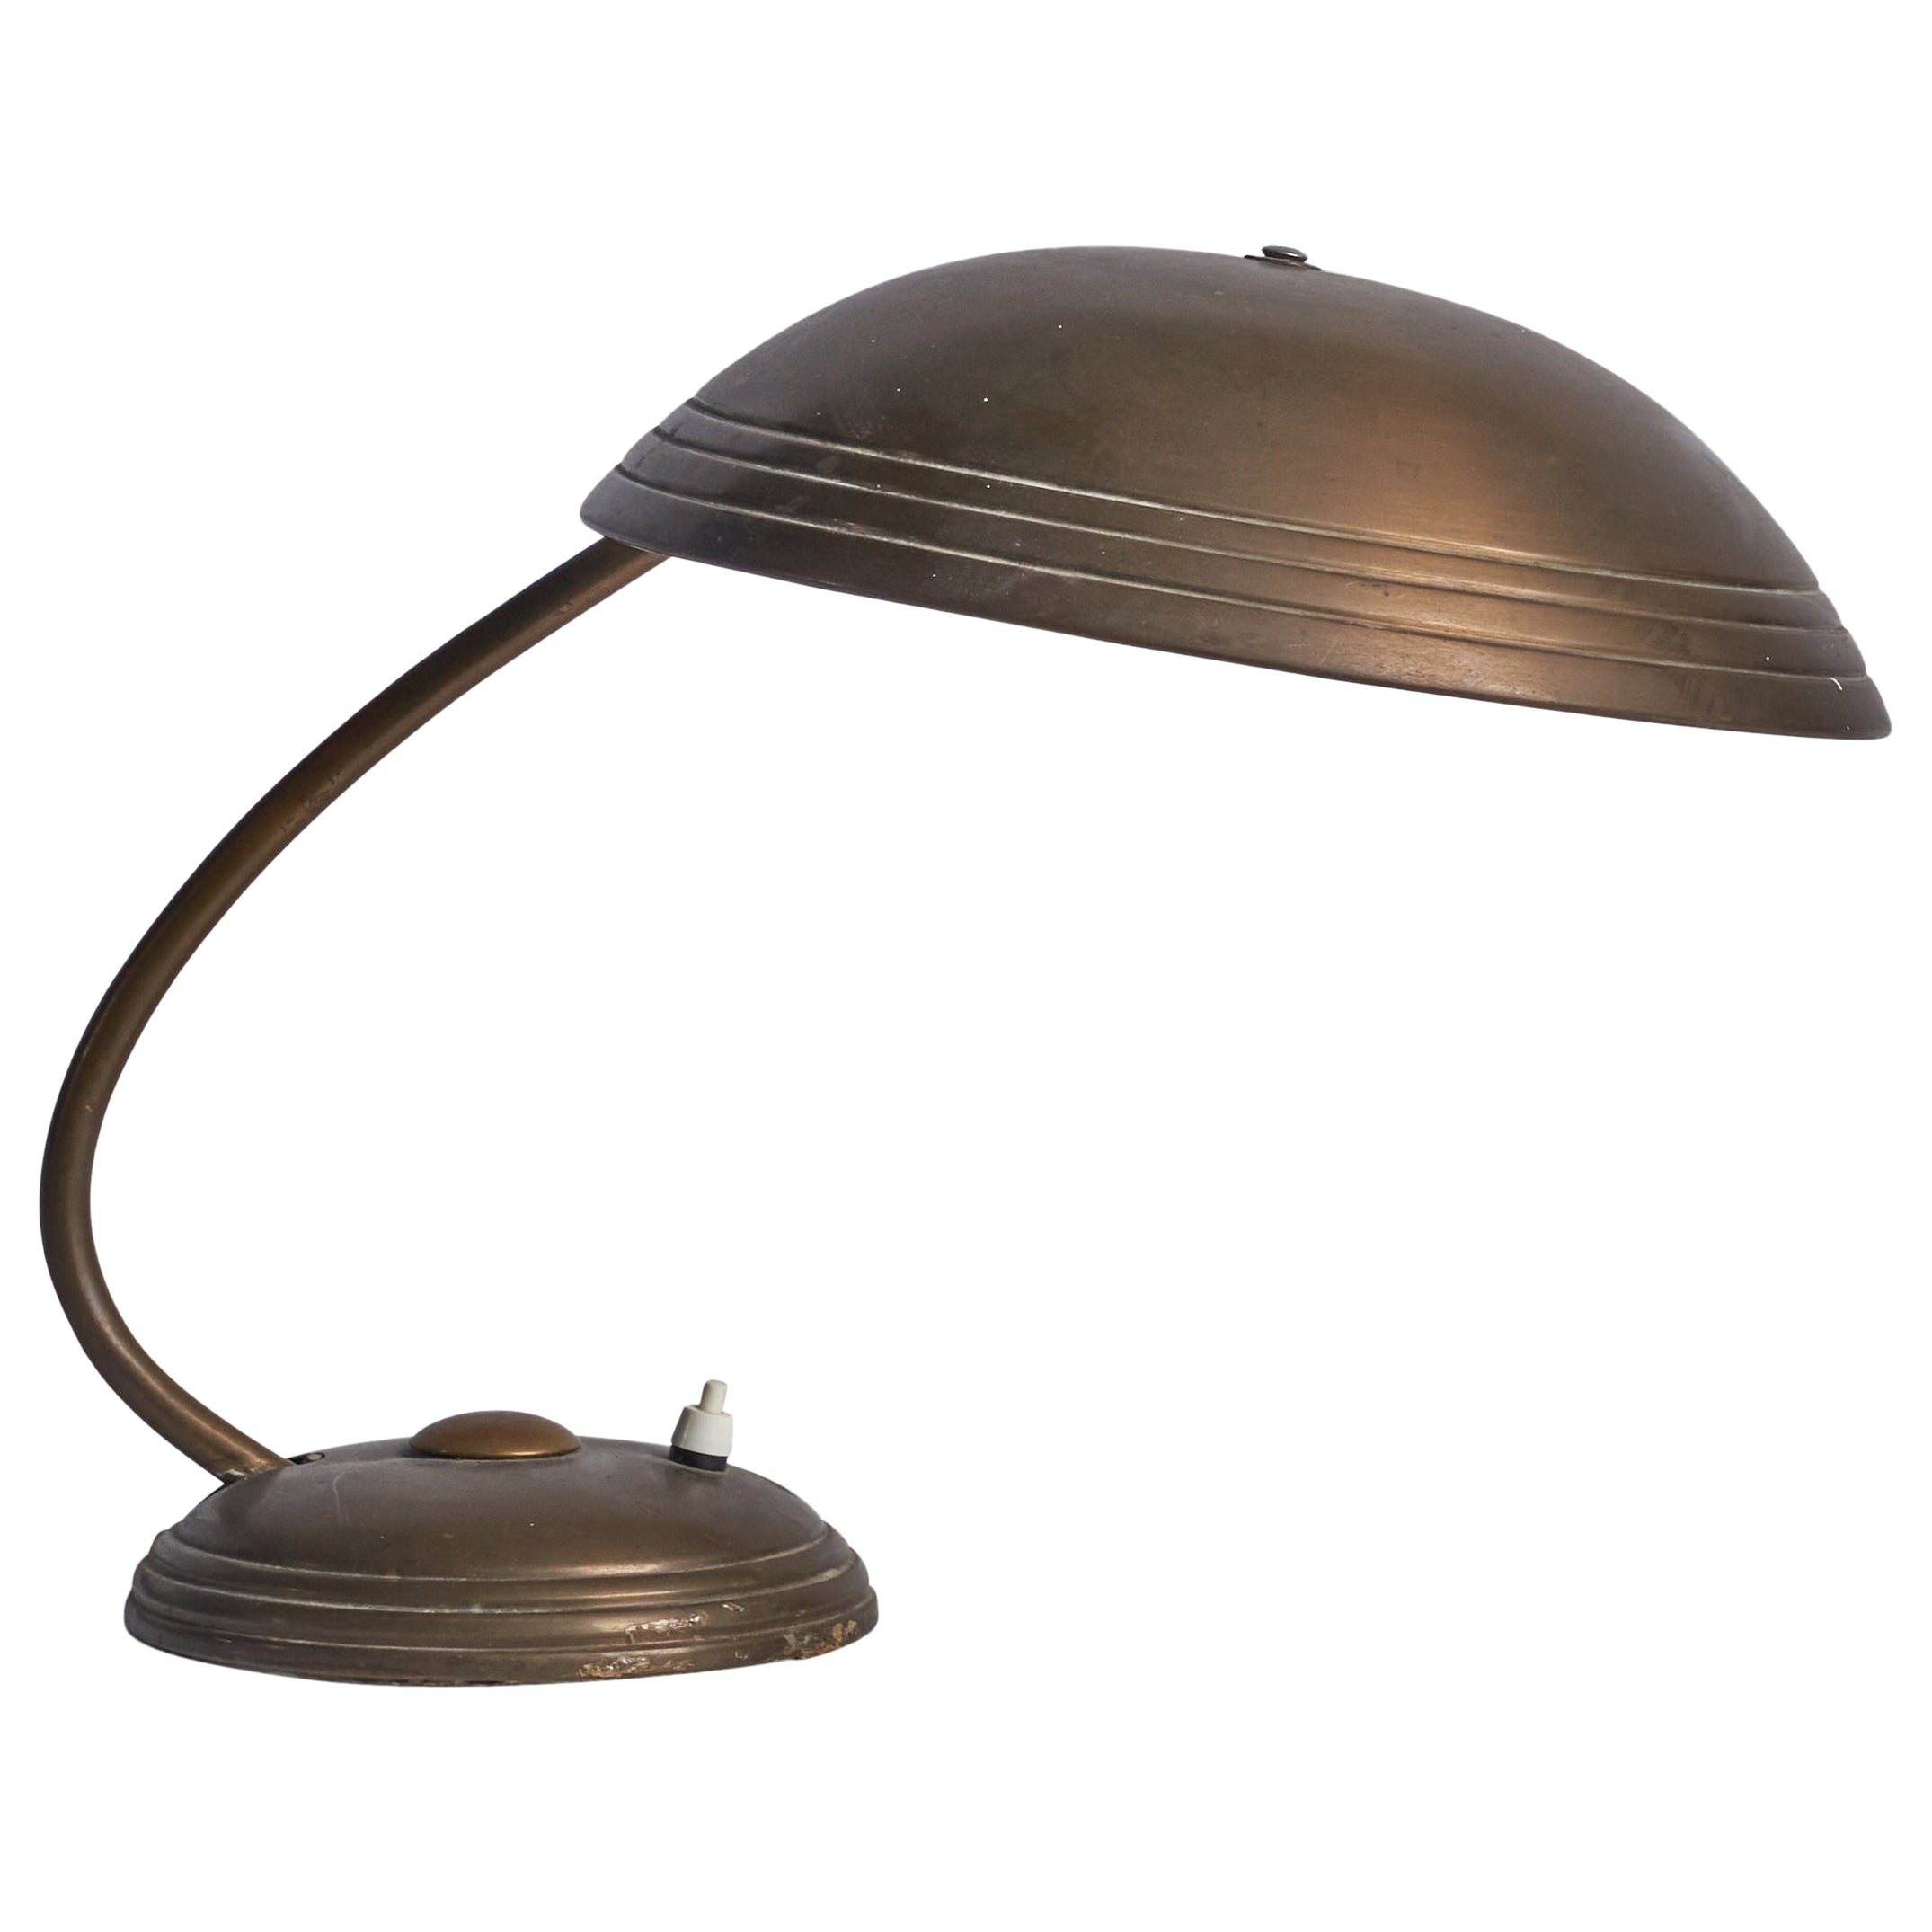 Helo Leuchten, Table Lamp, Brass, Germany, 1940s